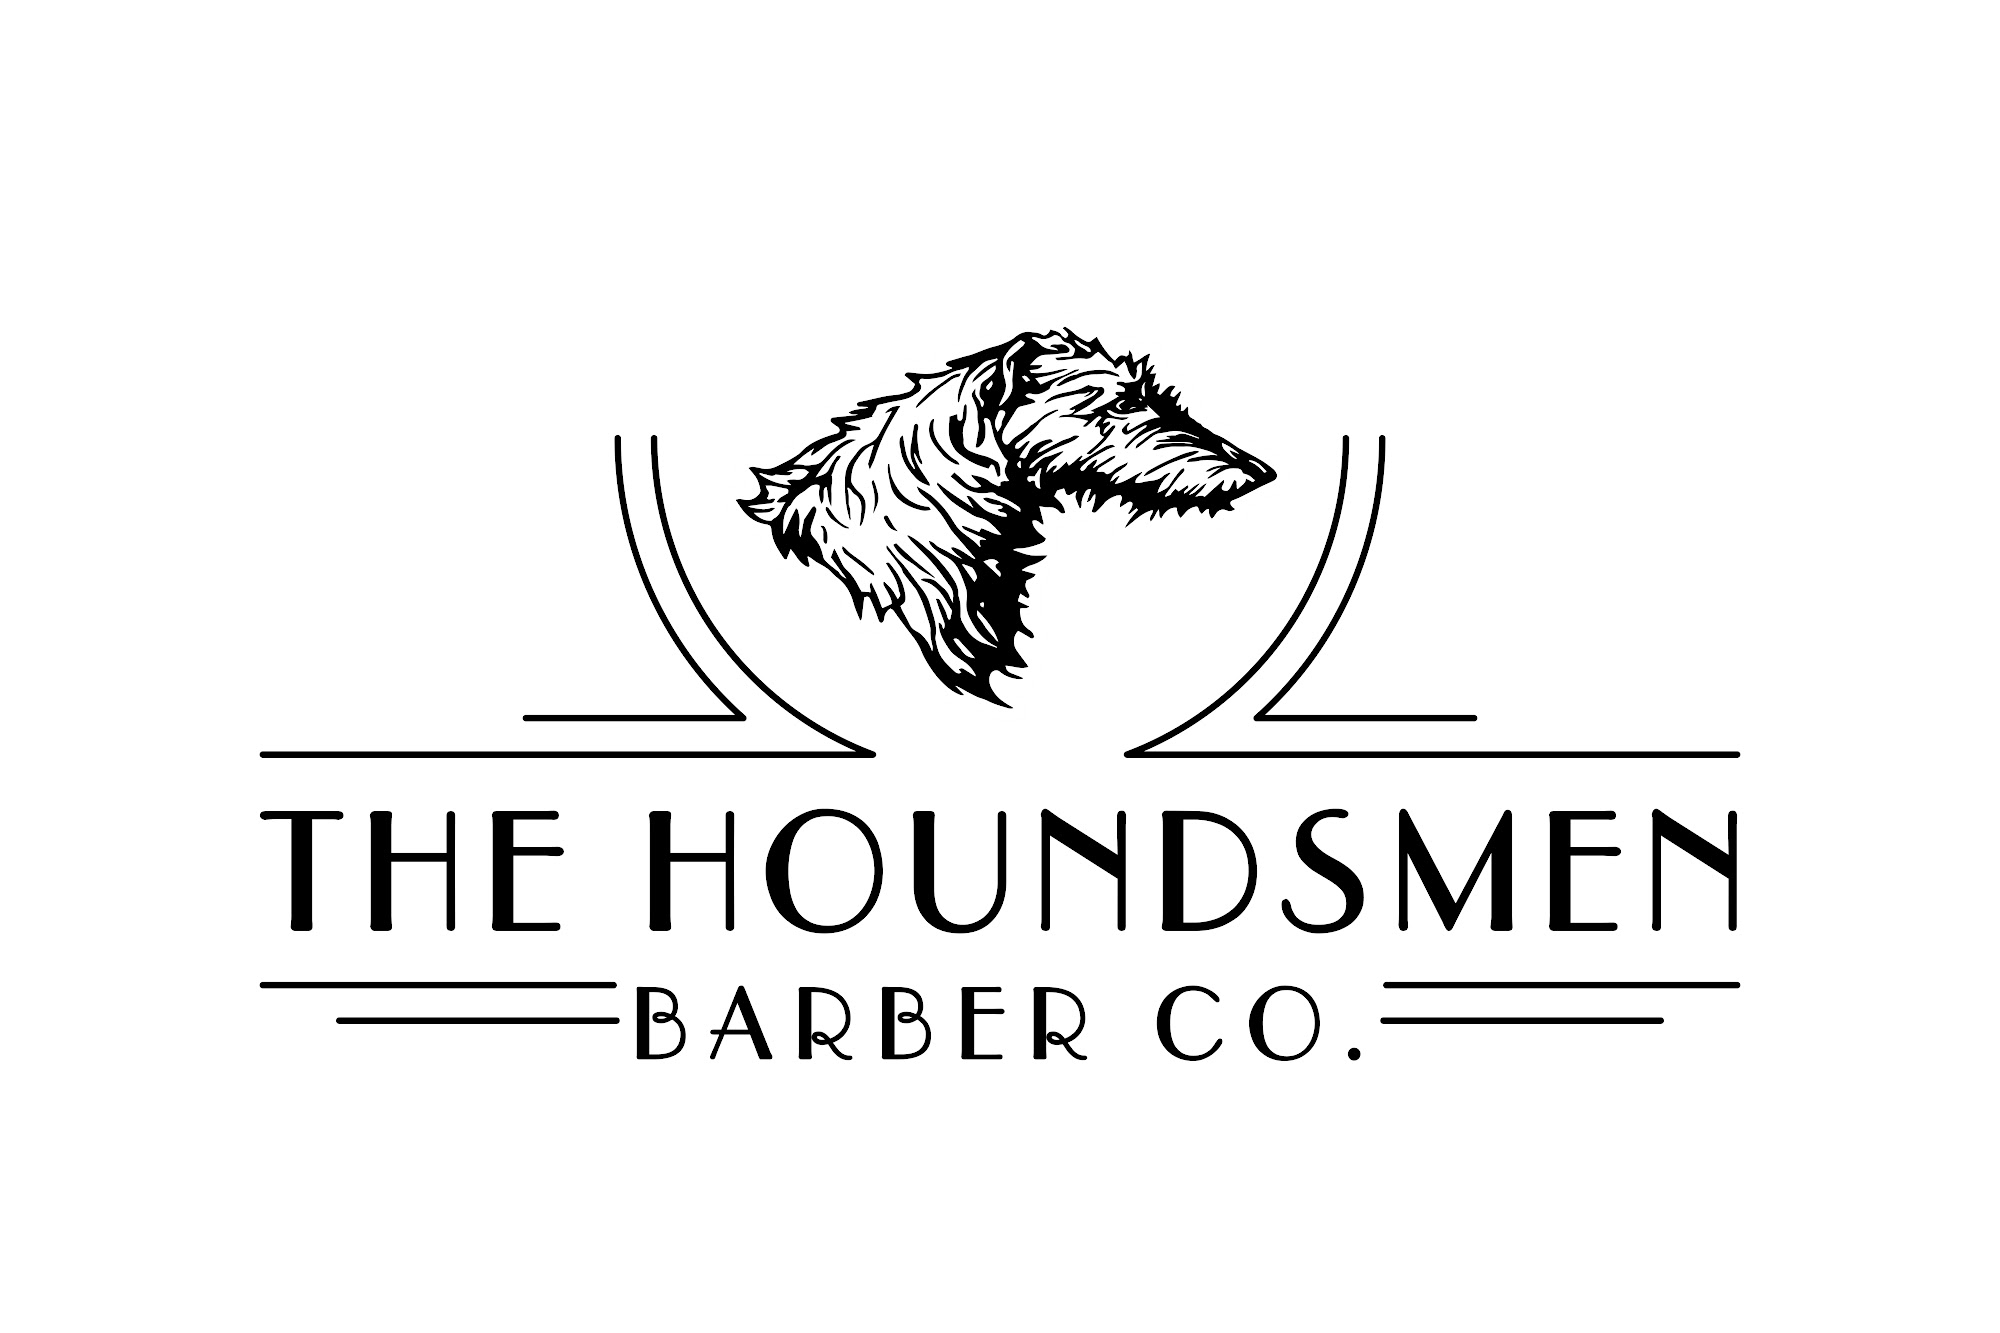 The Houndsmen Barber Co.